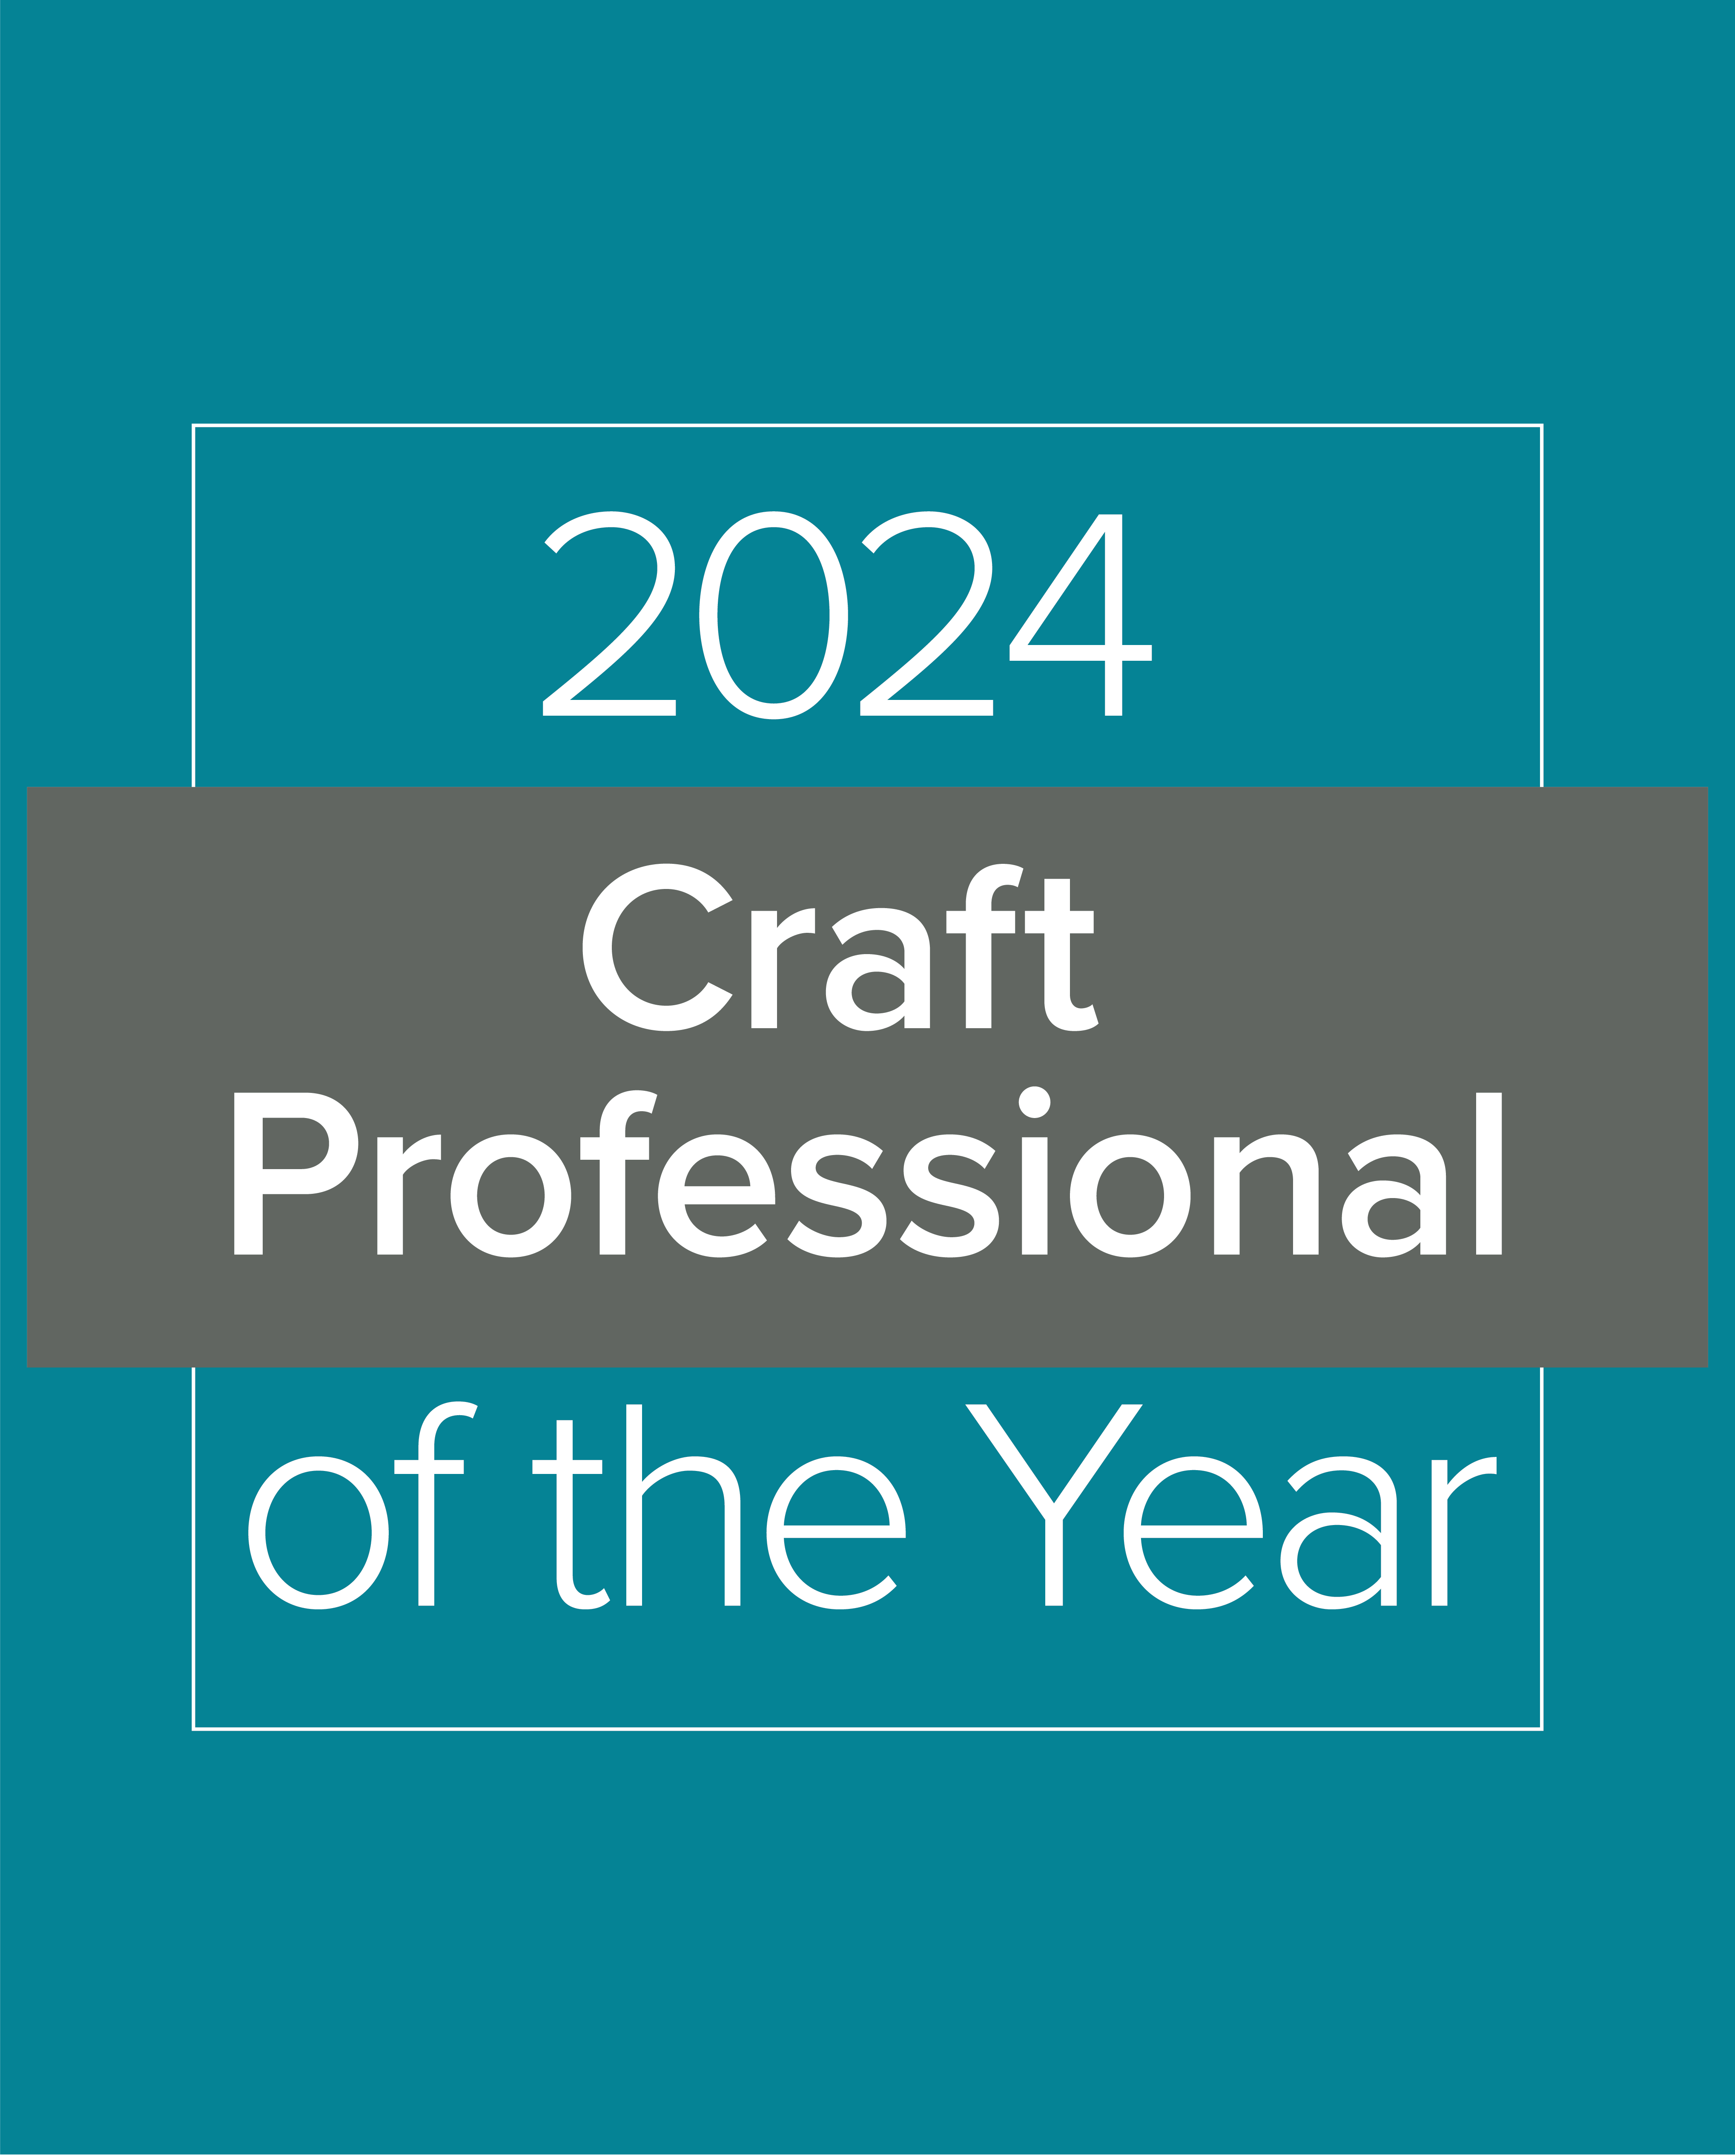 2023_Craft Professional